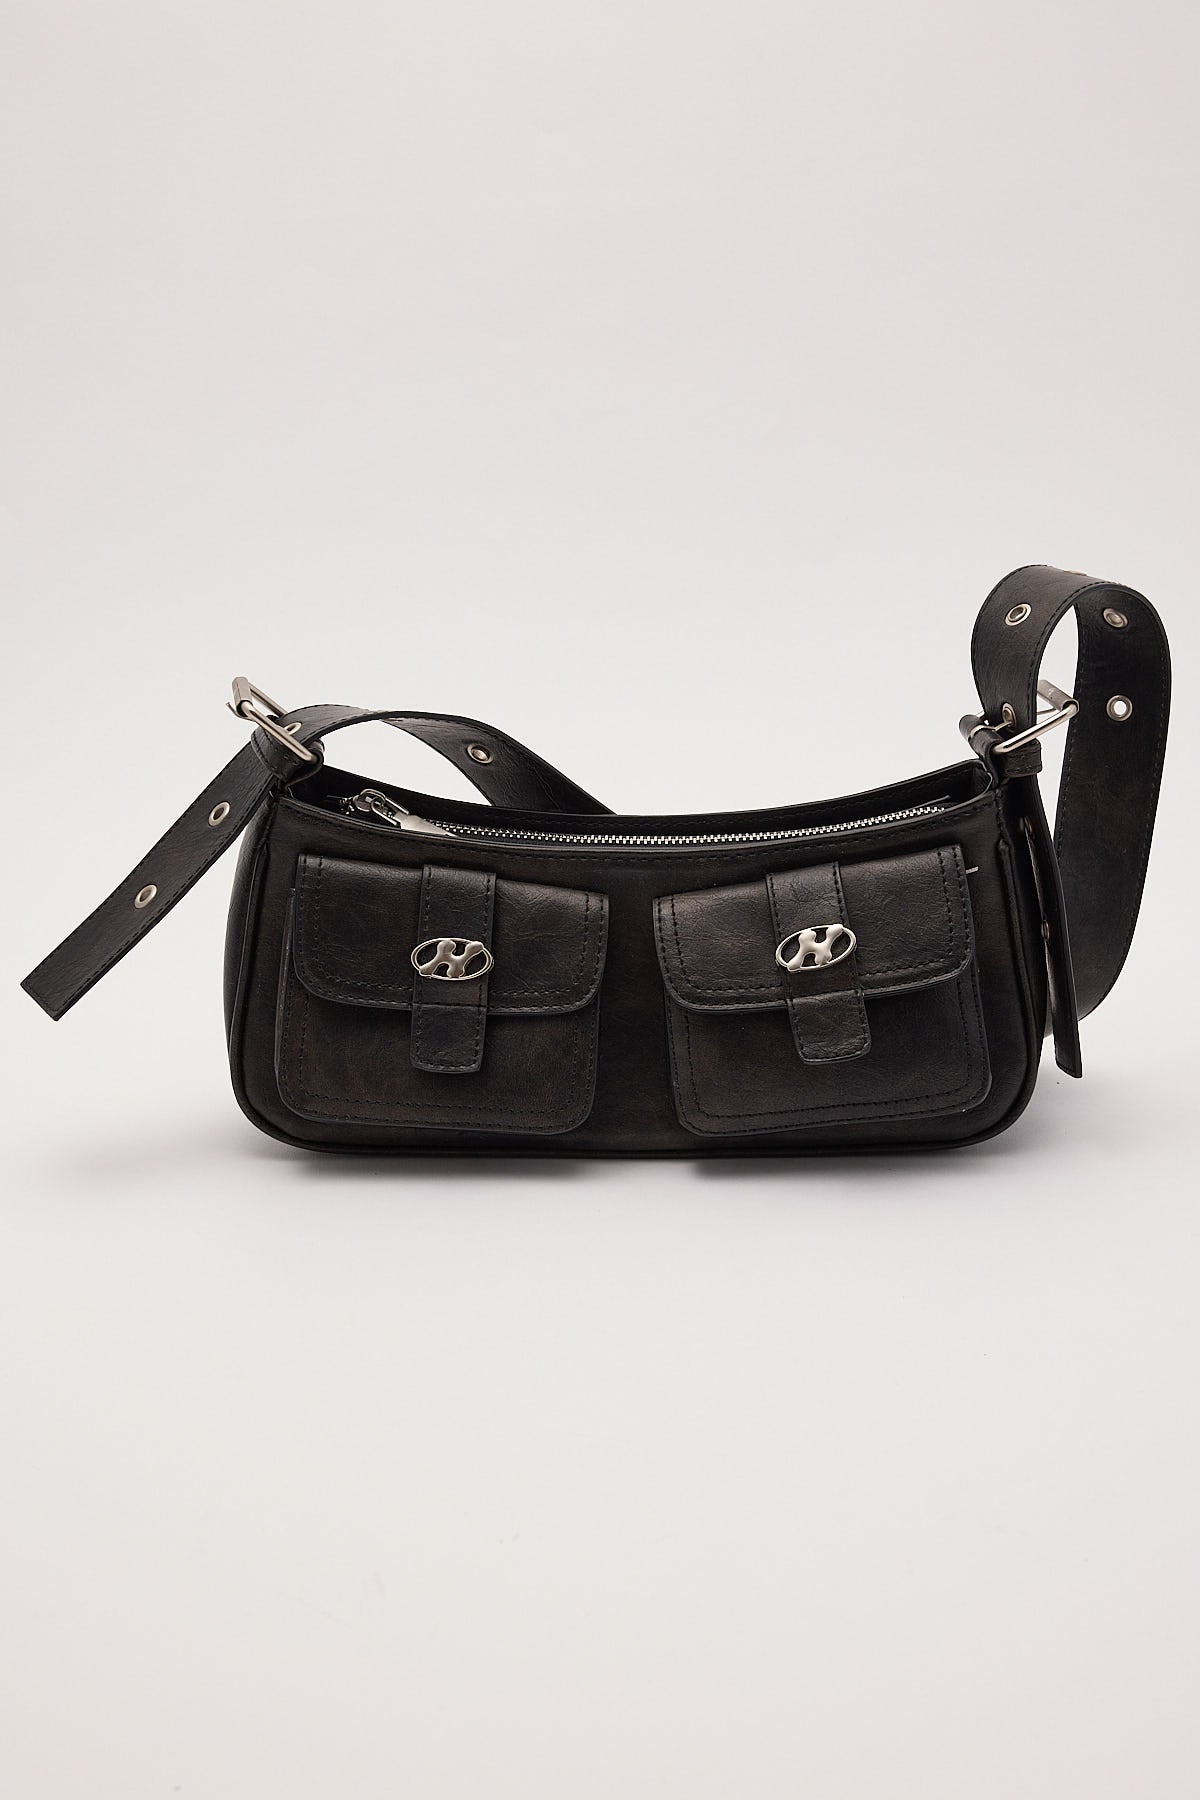 Neovision Contessa Multi Pocket Handbag Washed Black